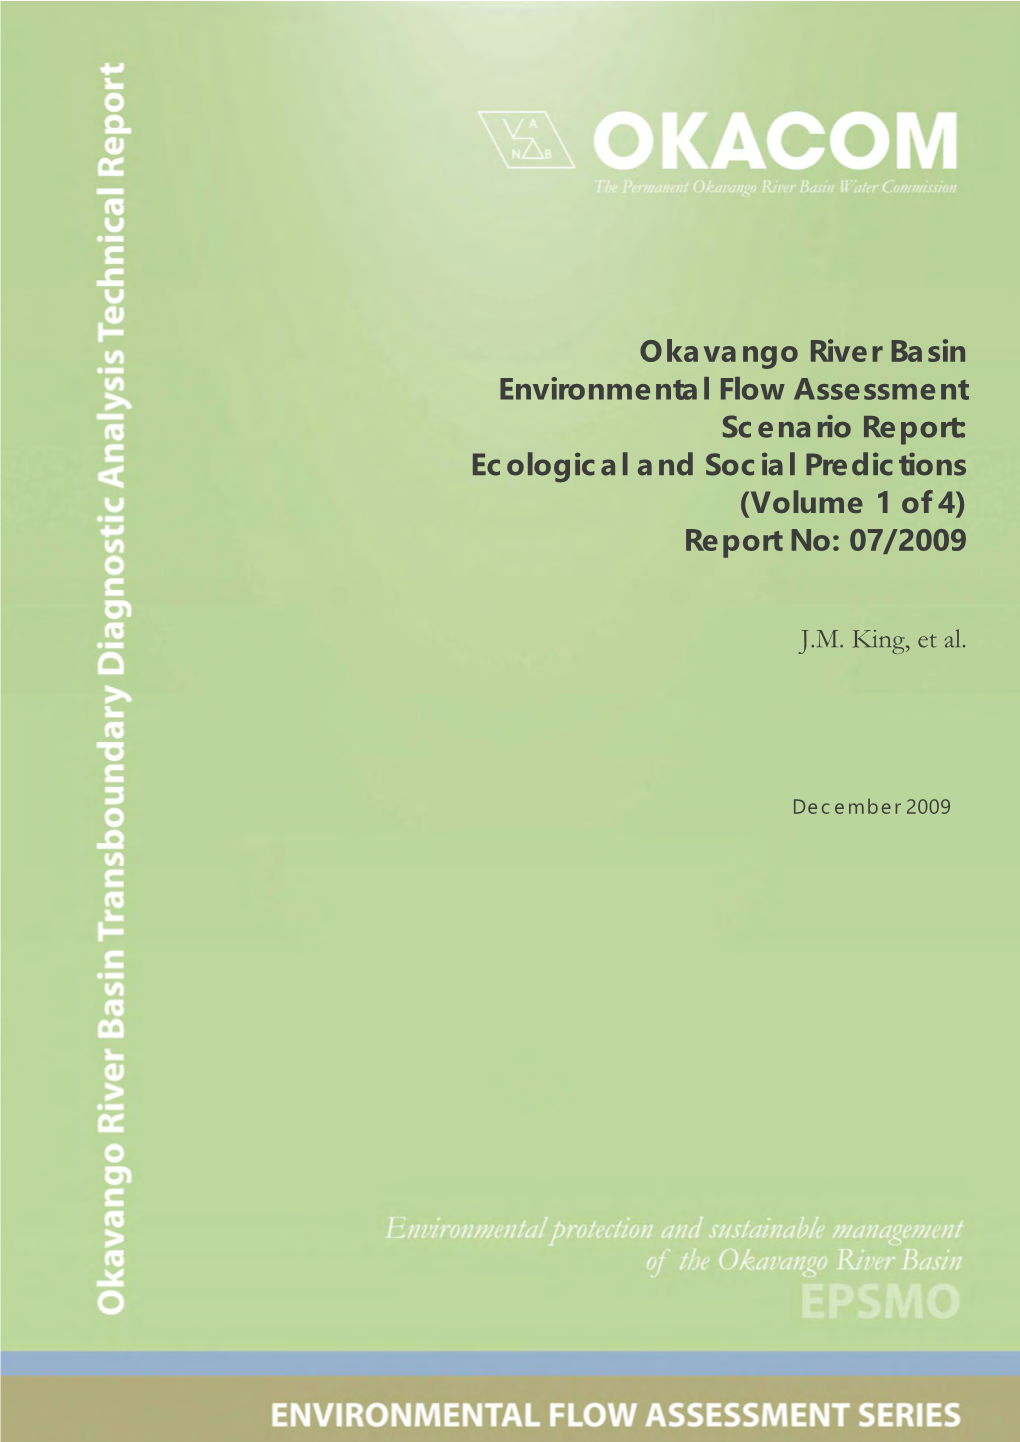 Okavango River Basin Environmental Flow Assessment Scenario Report: Ecological and Social Predictions (Volume 1 of 4) Report No: 07/2009